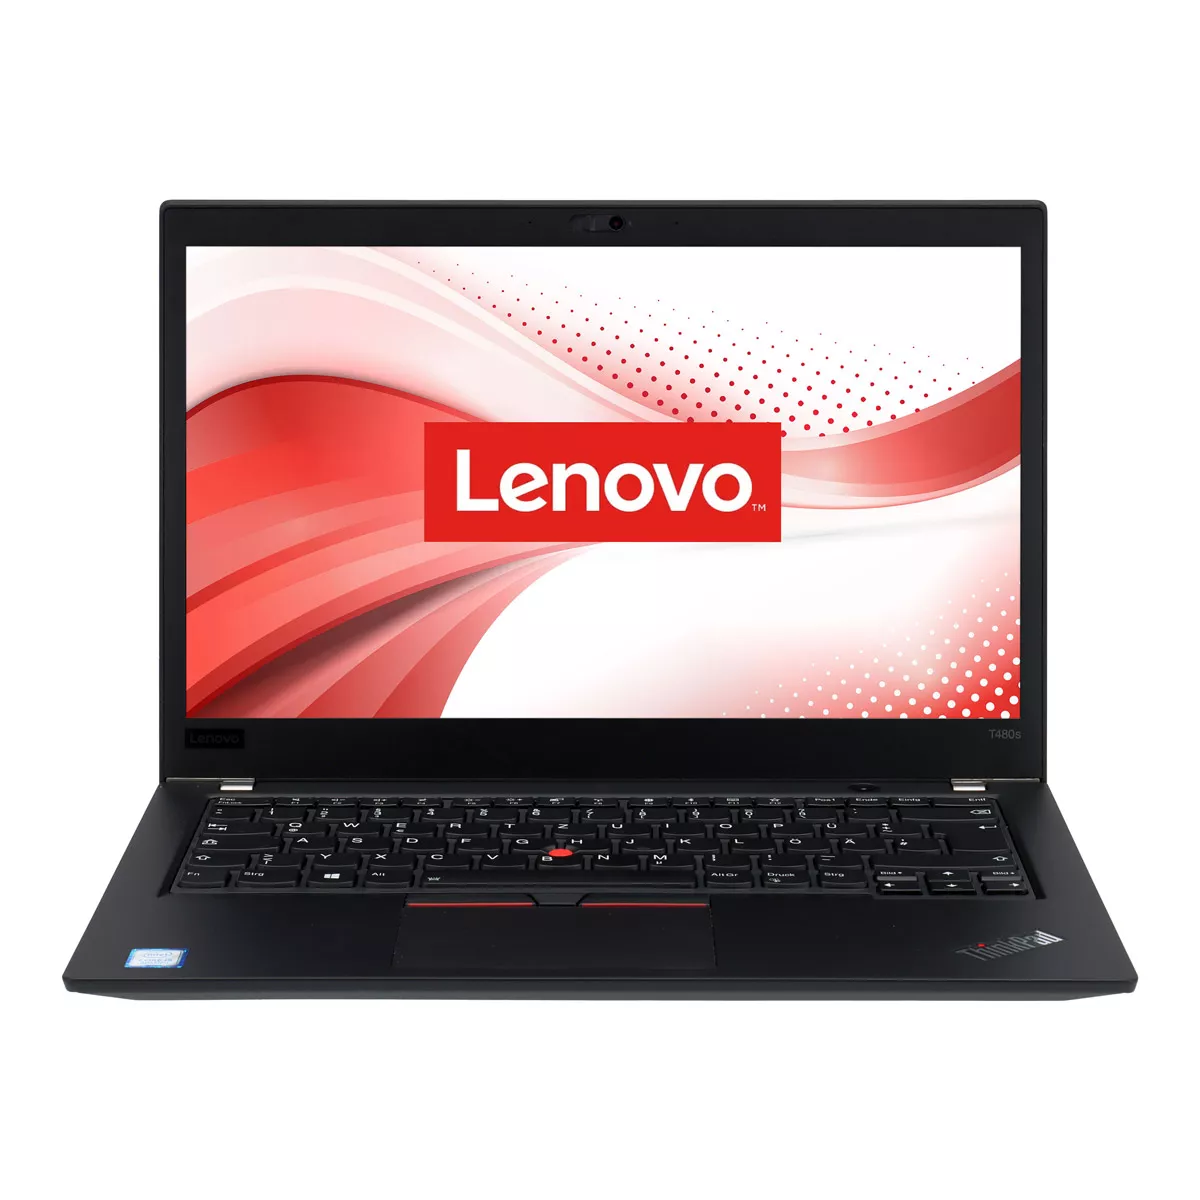 Lenovo ThinkPad T480s Core i5 8250U Full-HD 500 GB M.2 nVME SSD Webcam A+